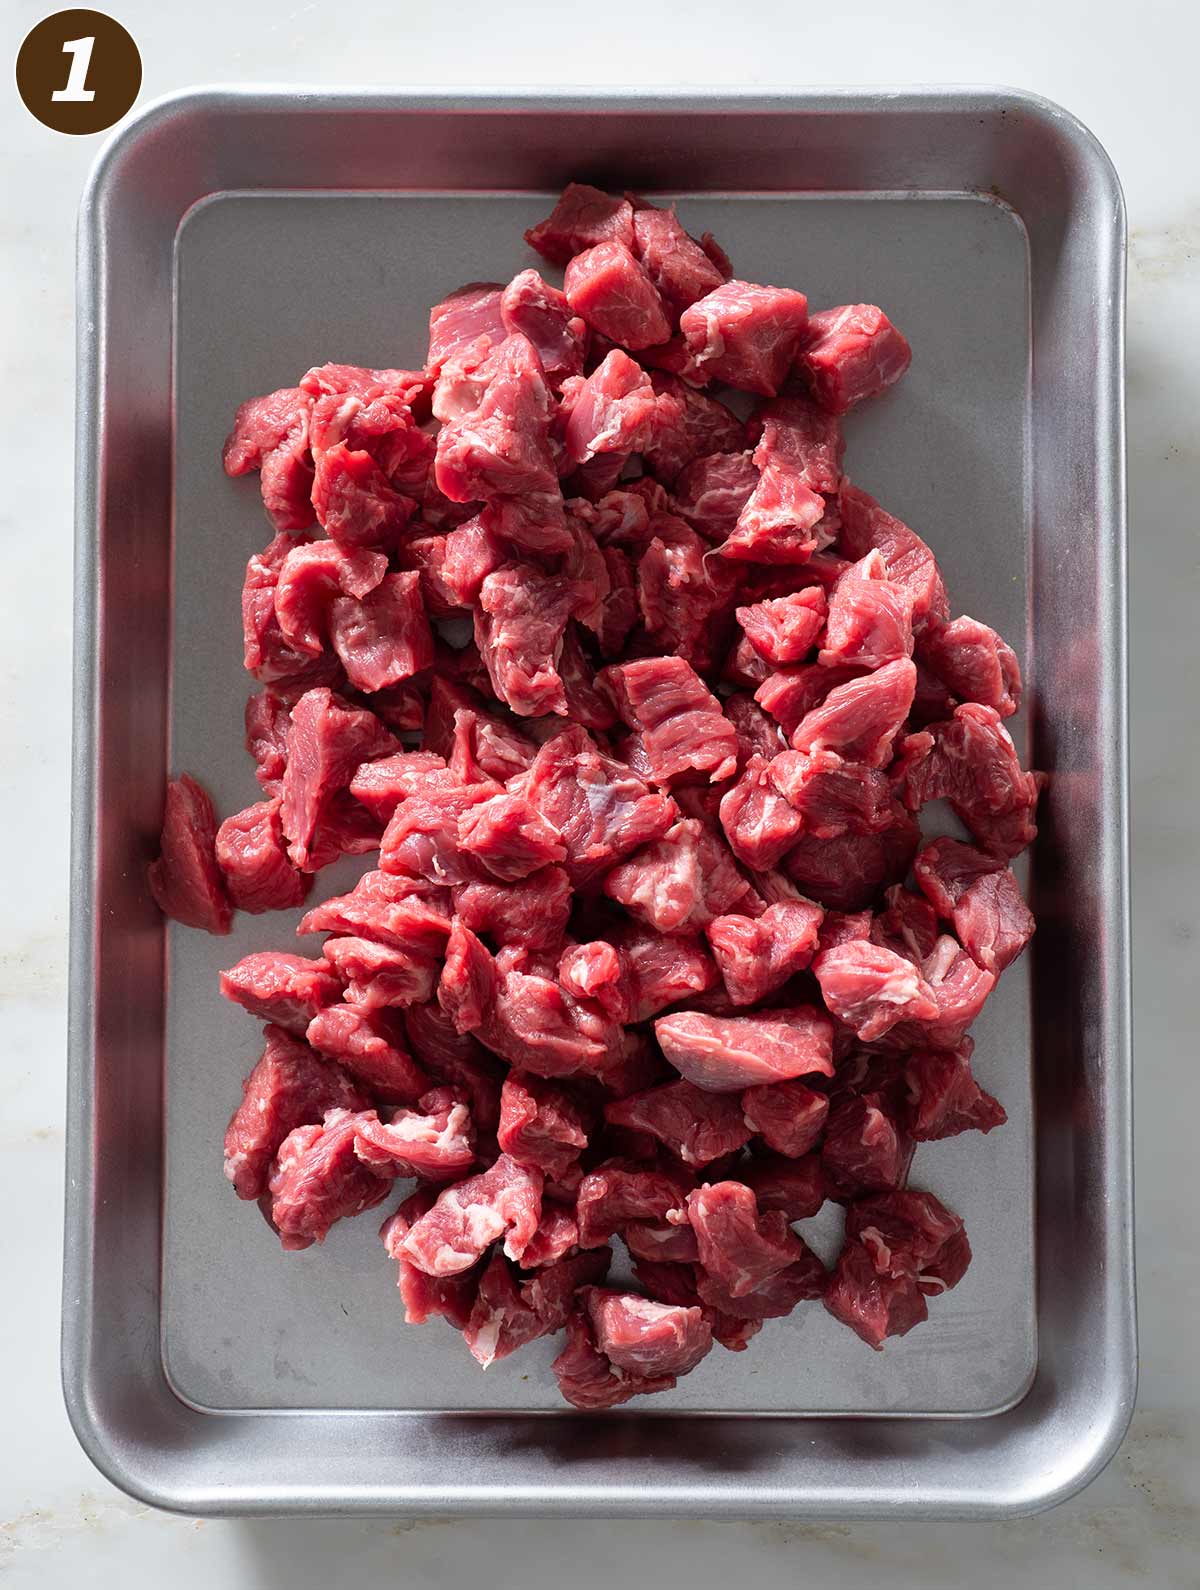 Raw chuck beef chunks on a metal tray.